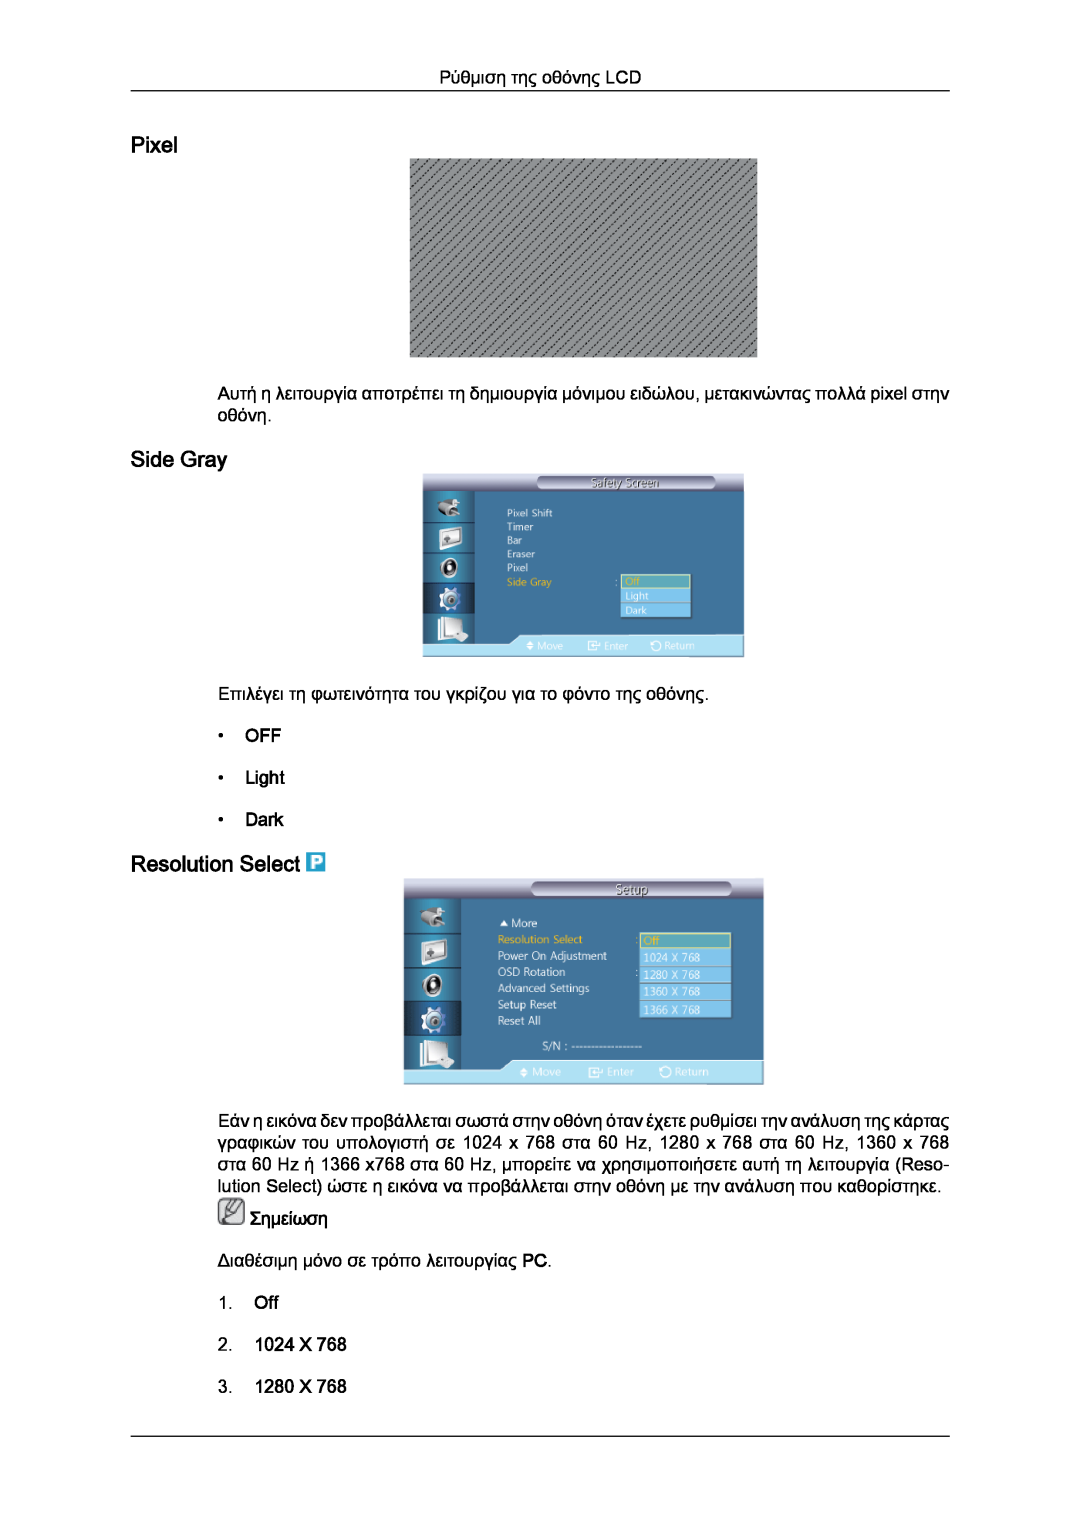 Samsung LH46GWPLBC/EN manual Pixel, Side Gray, Resolution Select, OFF Light Dark, Off 2. 1024 X 3. 1280 X, Σημείωση 